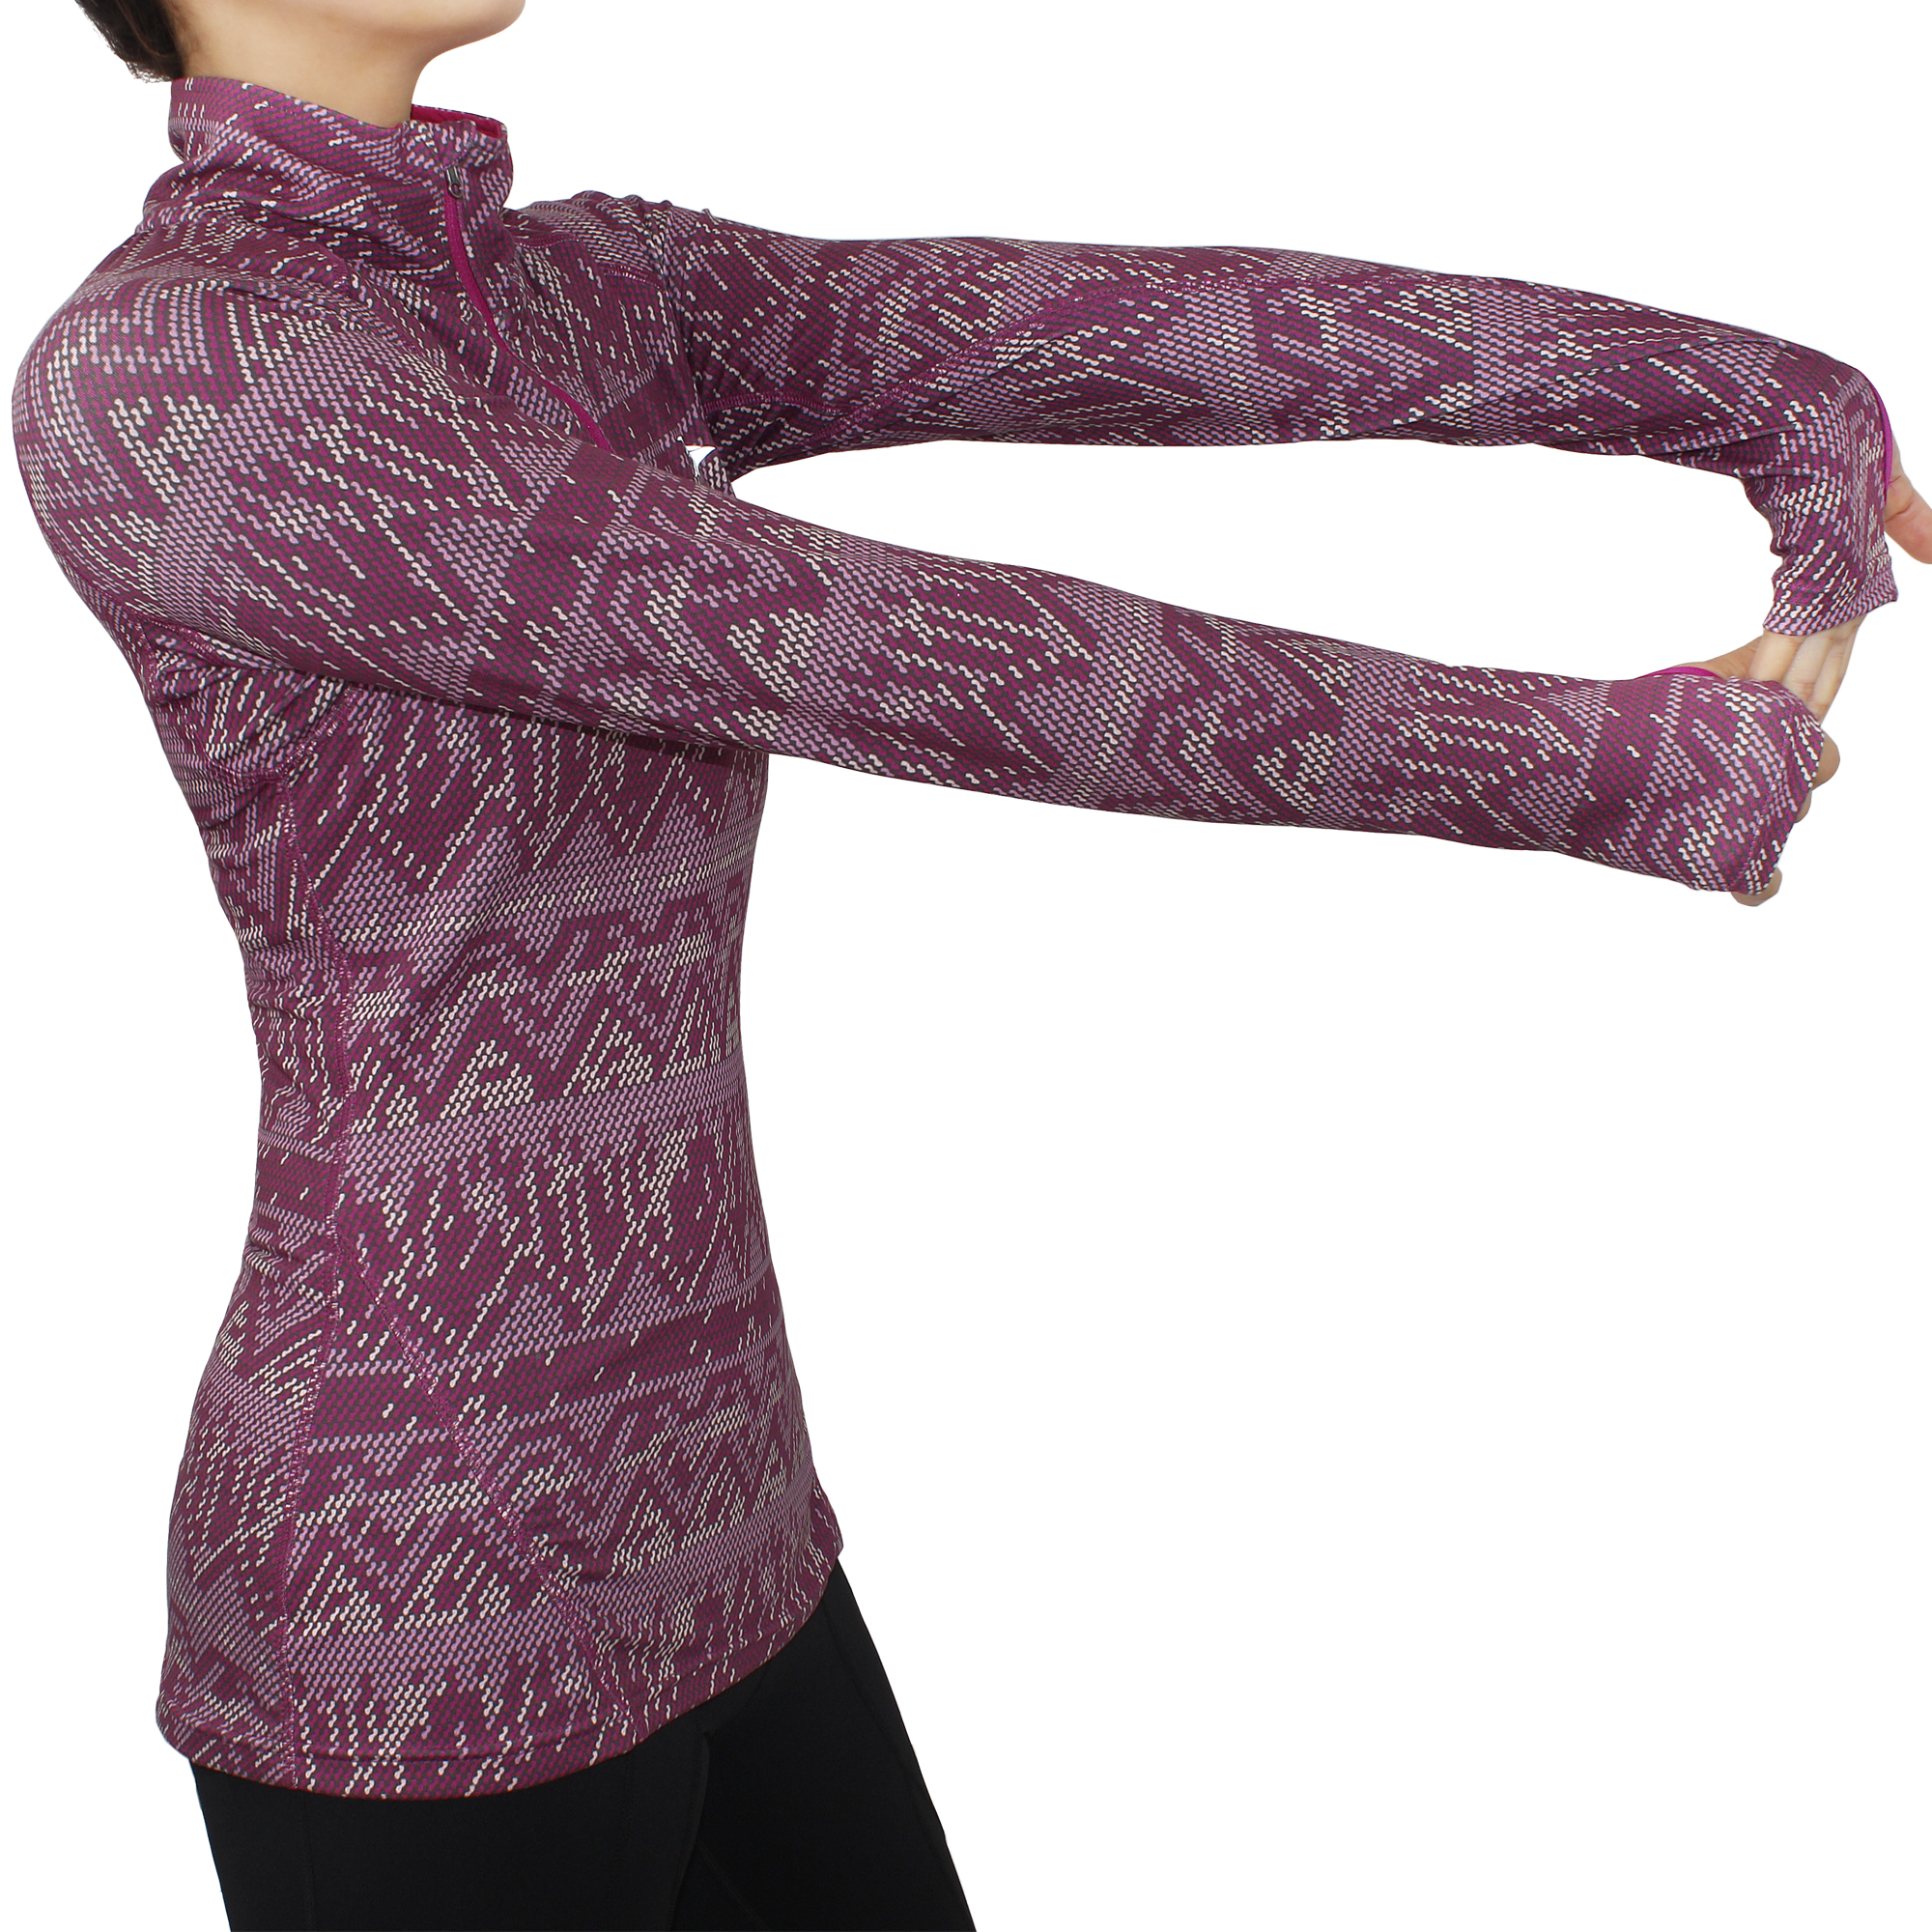 Women's Half Zip Light Long Sleeve Printed Tops Yoga Tee Running Pullover Shirts Top